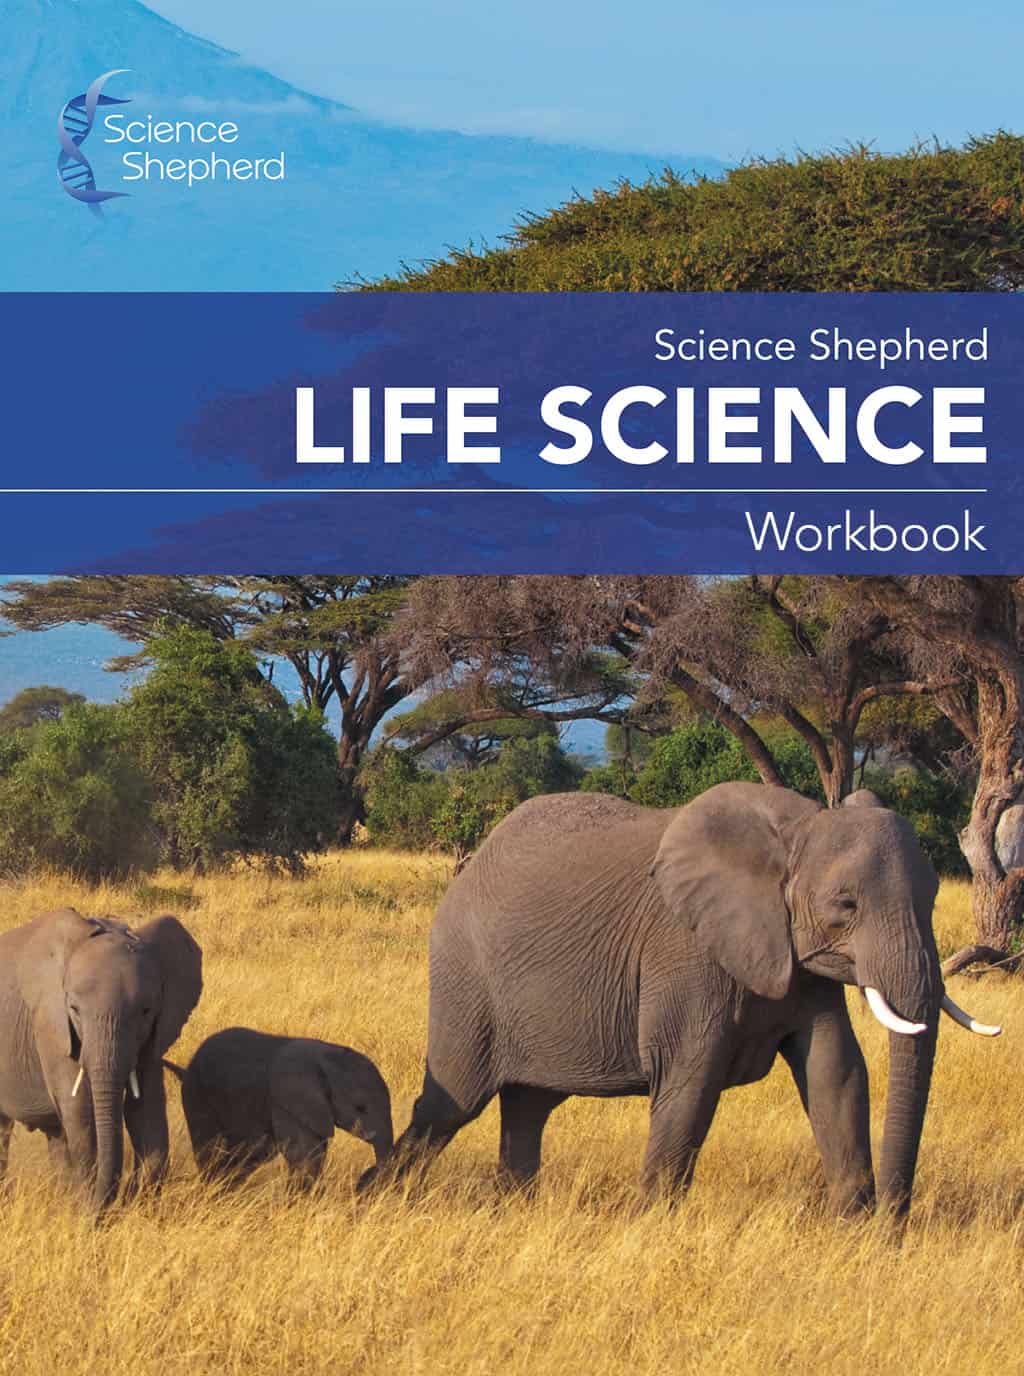 Homeschool Life Science Workbook cover of elephants on savanna